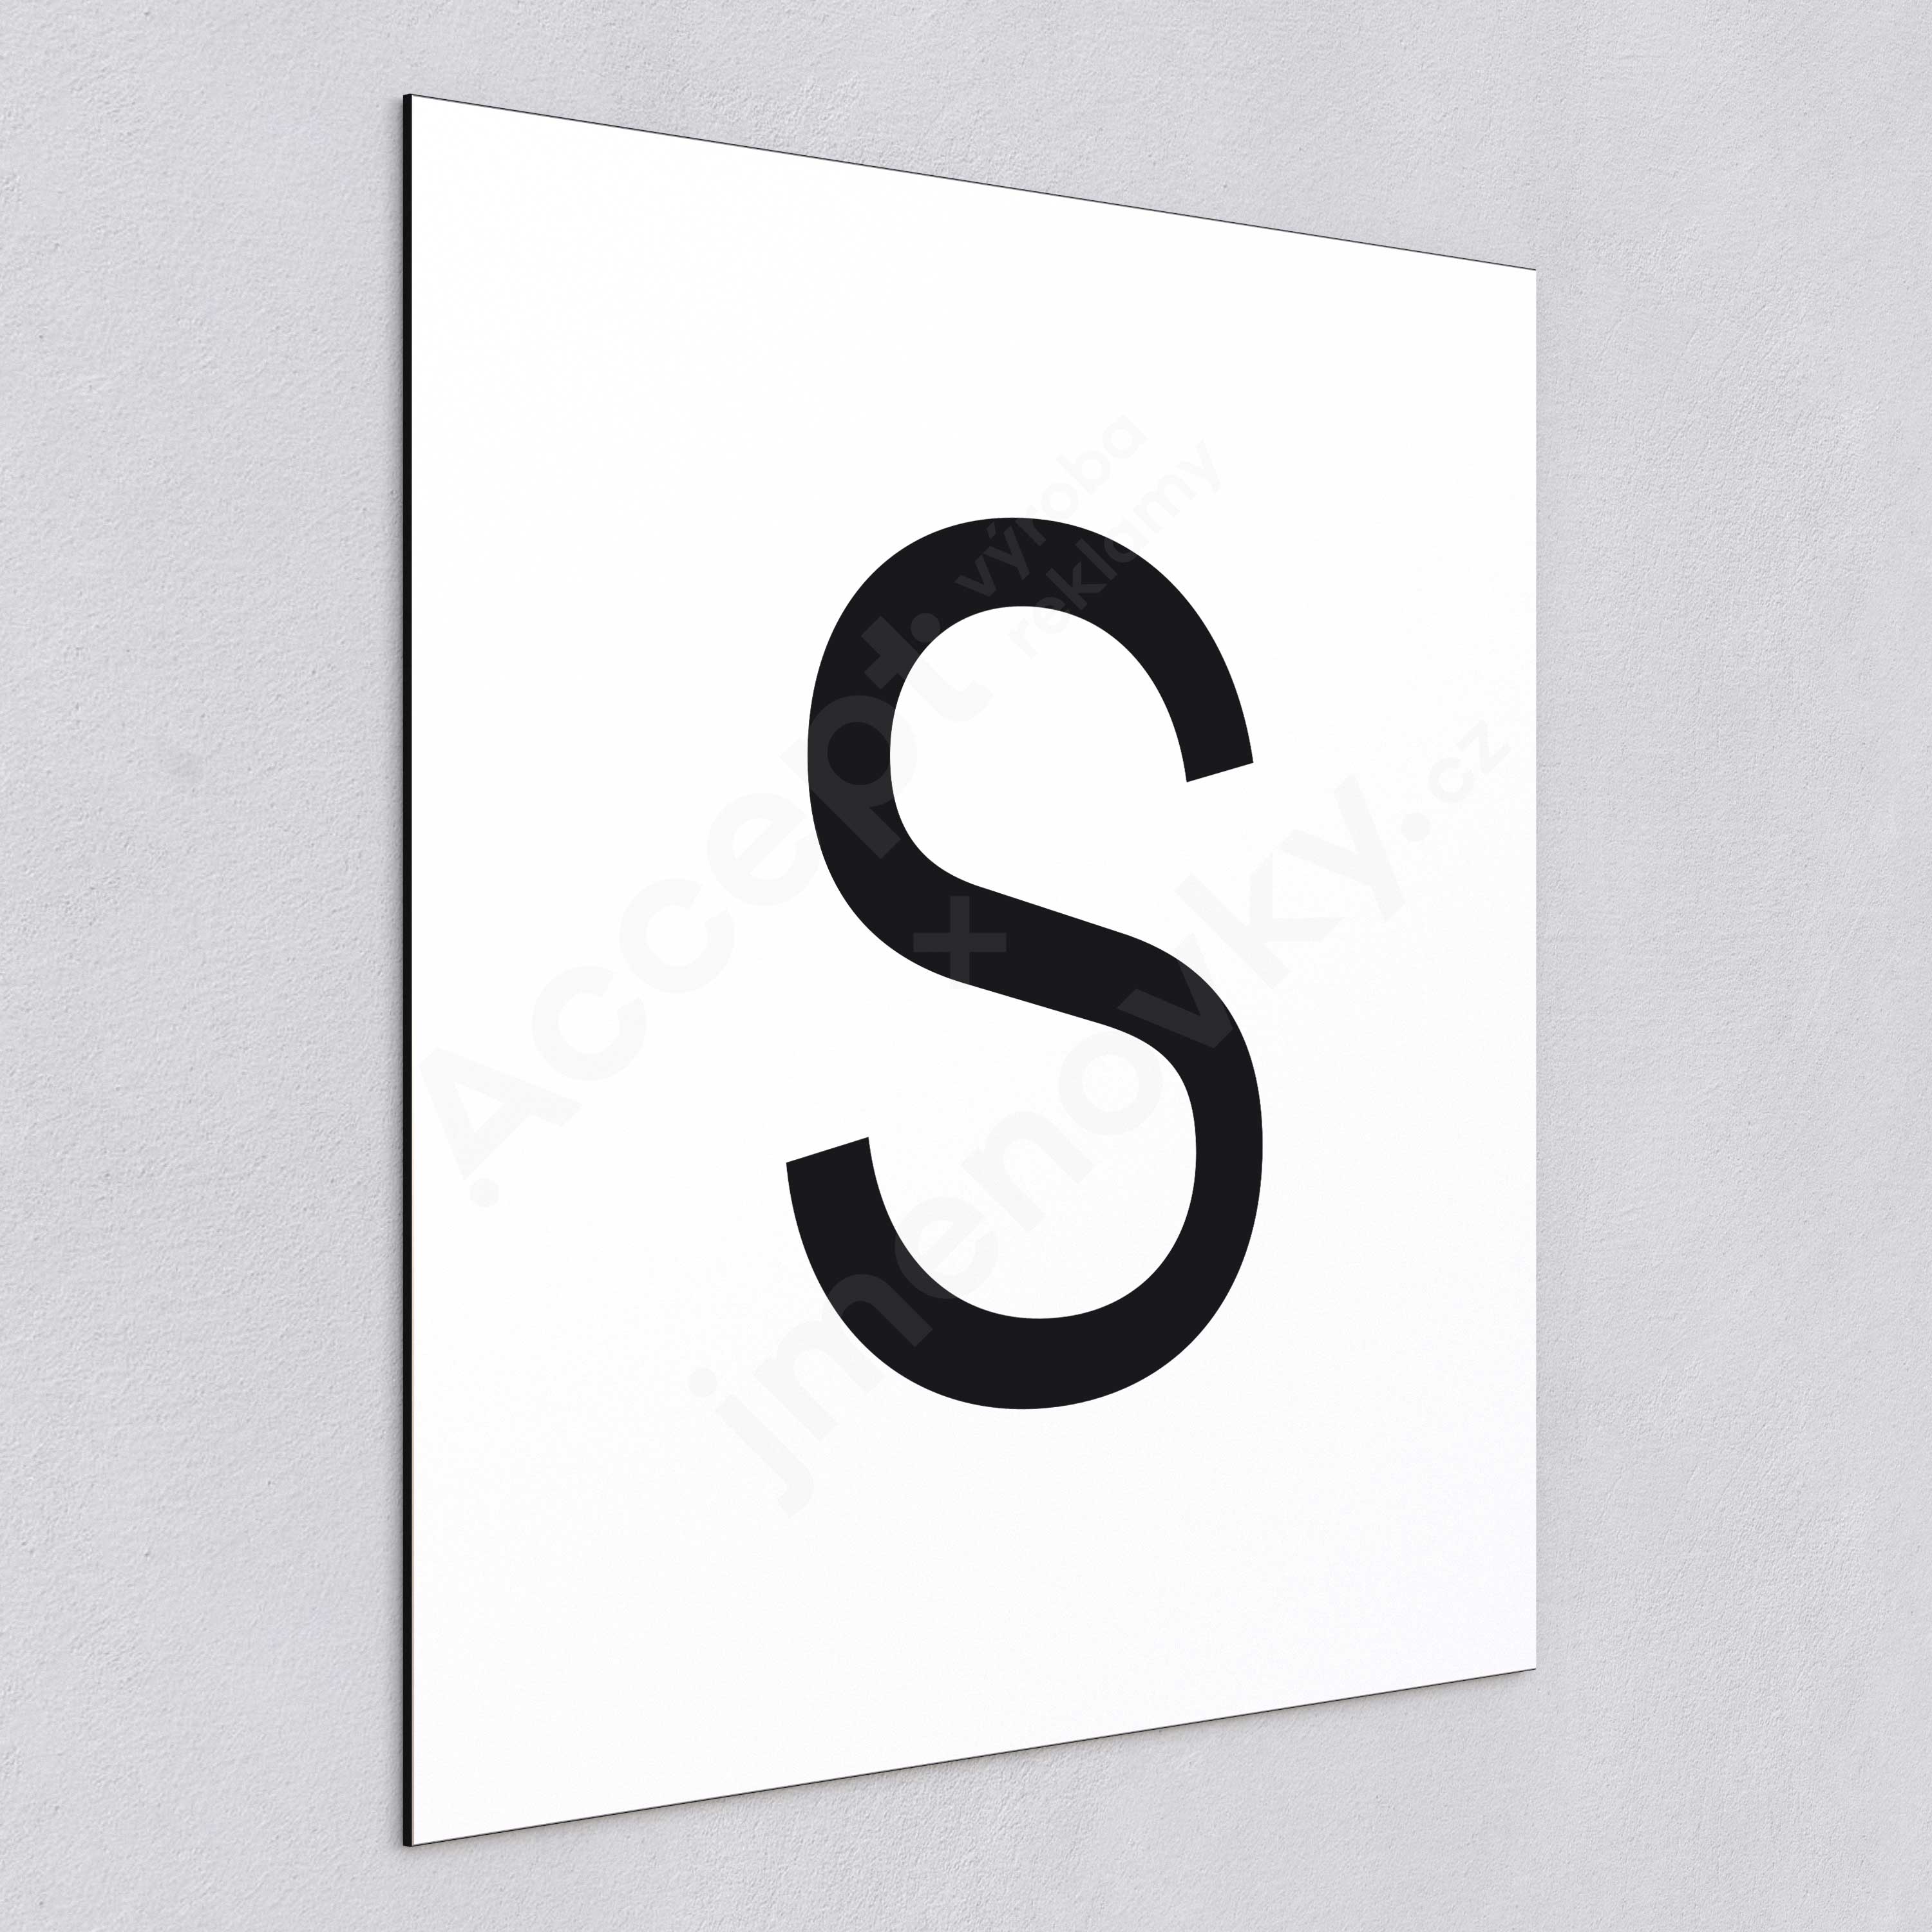 ACCEPT Označení podlaží - písmeno "S" (300 x 300 mm) - bílá tabulka - černý popis